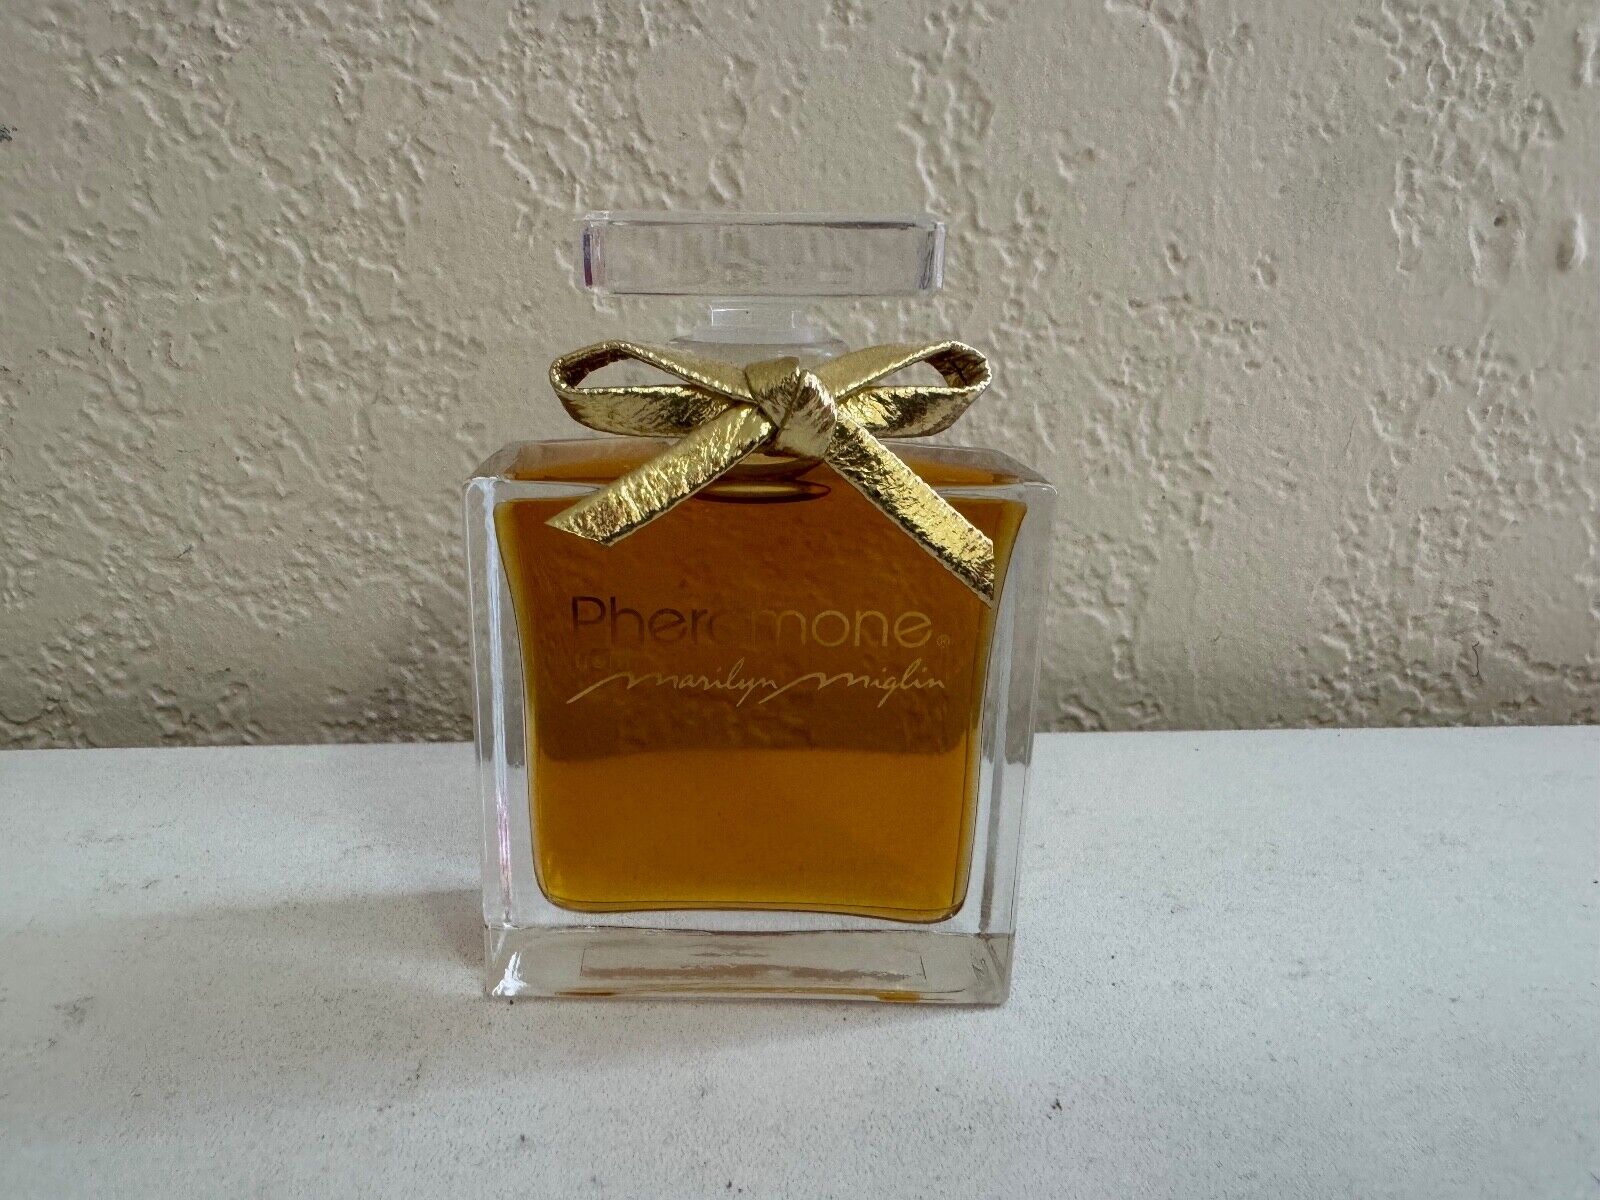 Pheromone from Marilyn Miglin 1 Oz Full Perfume Bottle